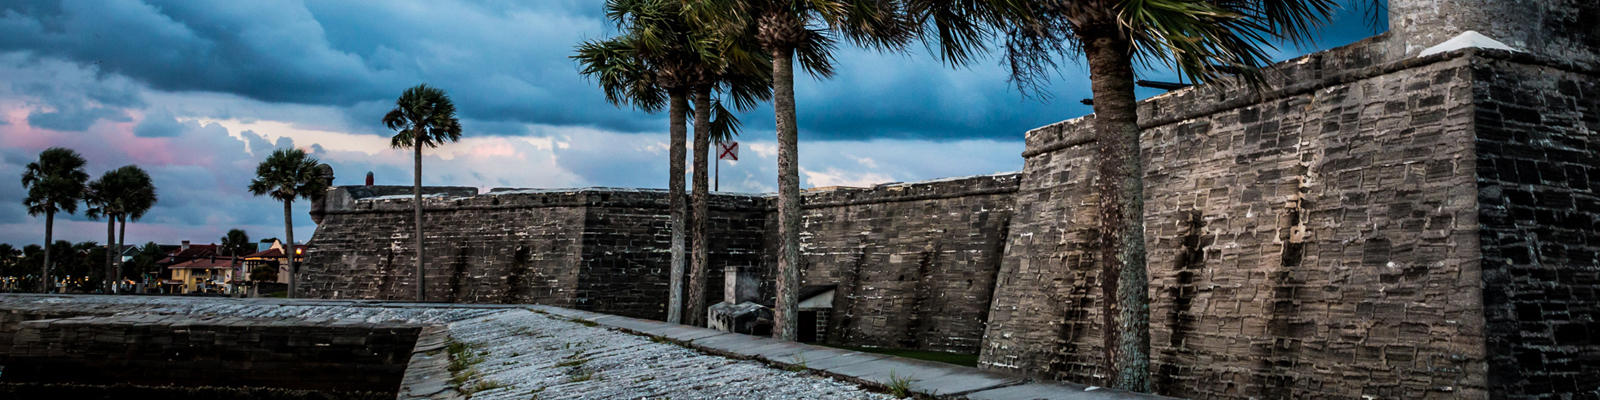 Fabulous Forts of the Coastal Southeast